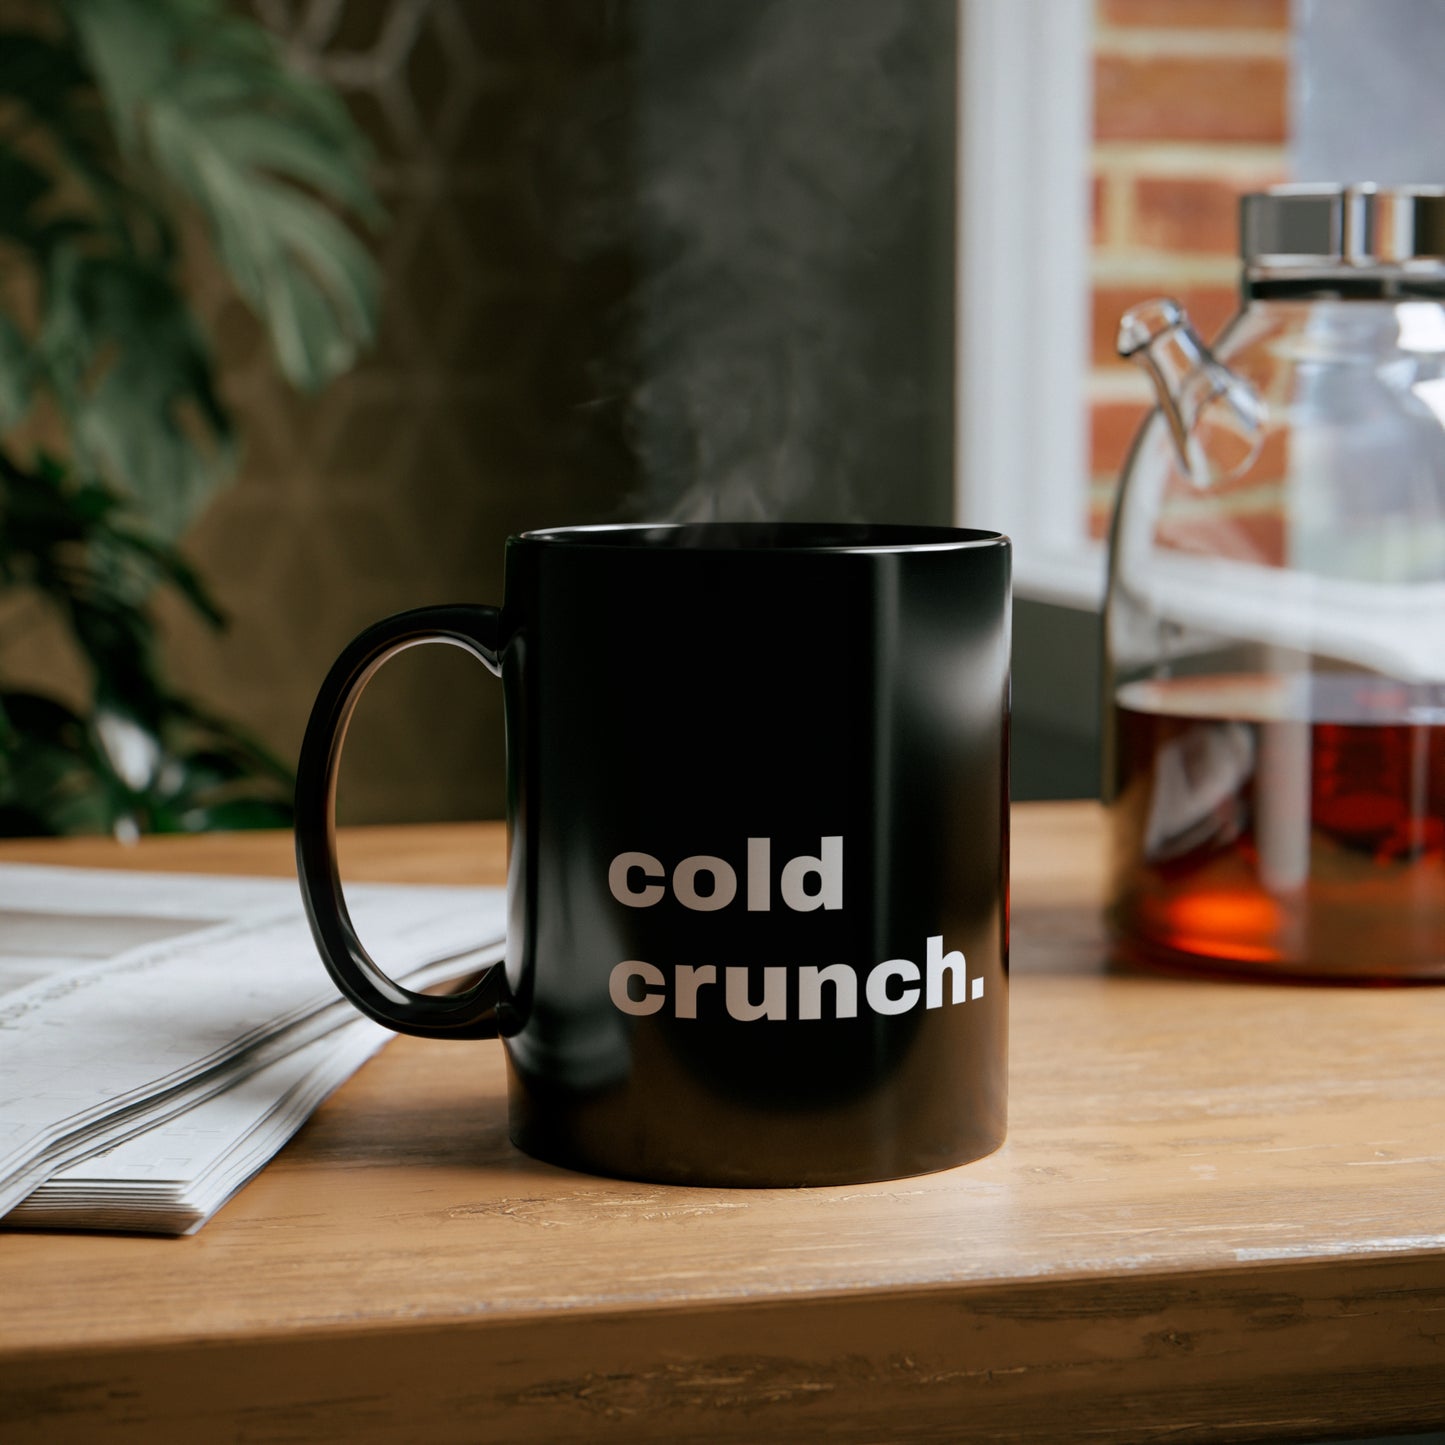 cold crunch. - Black Mug (11oz)